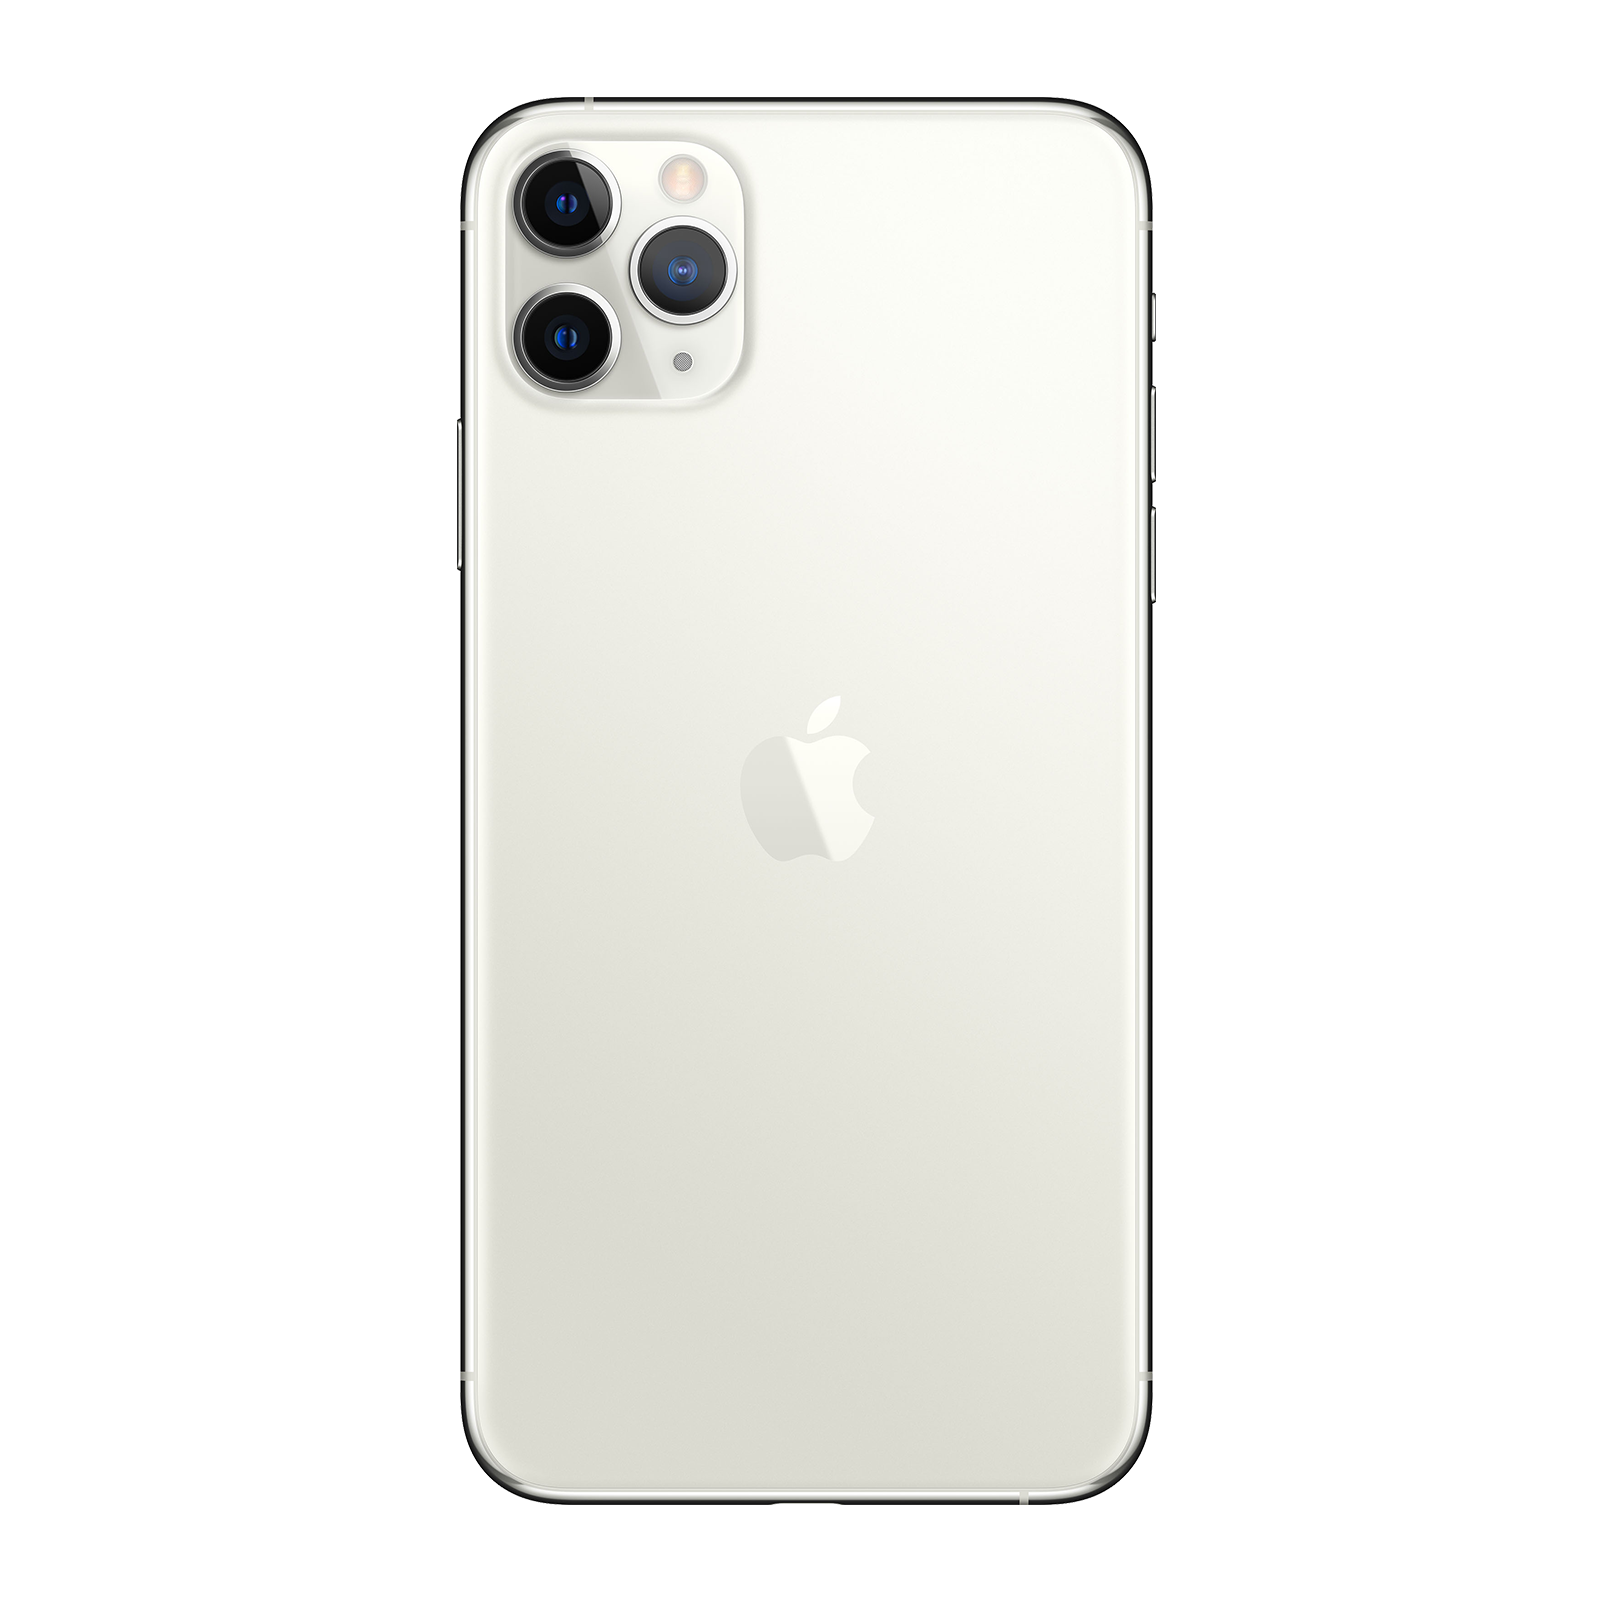 Apple iPhone 11 Pro 256GB Silver Very Good - Unlocked